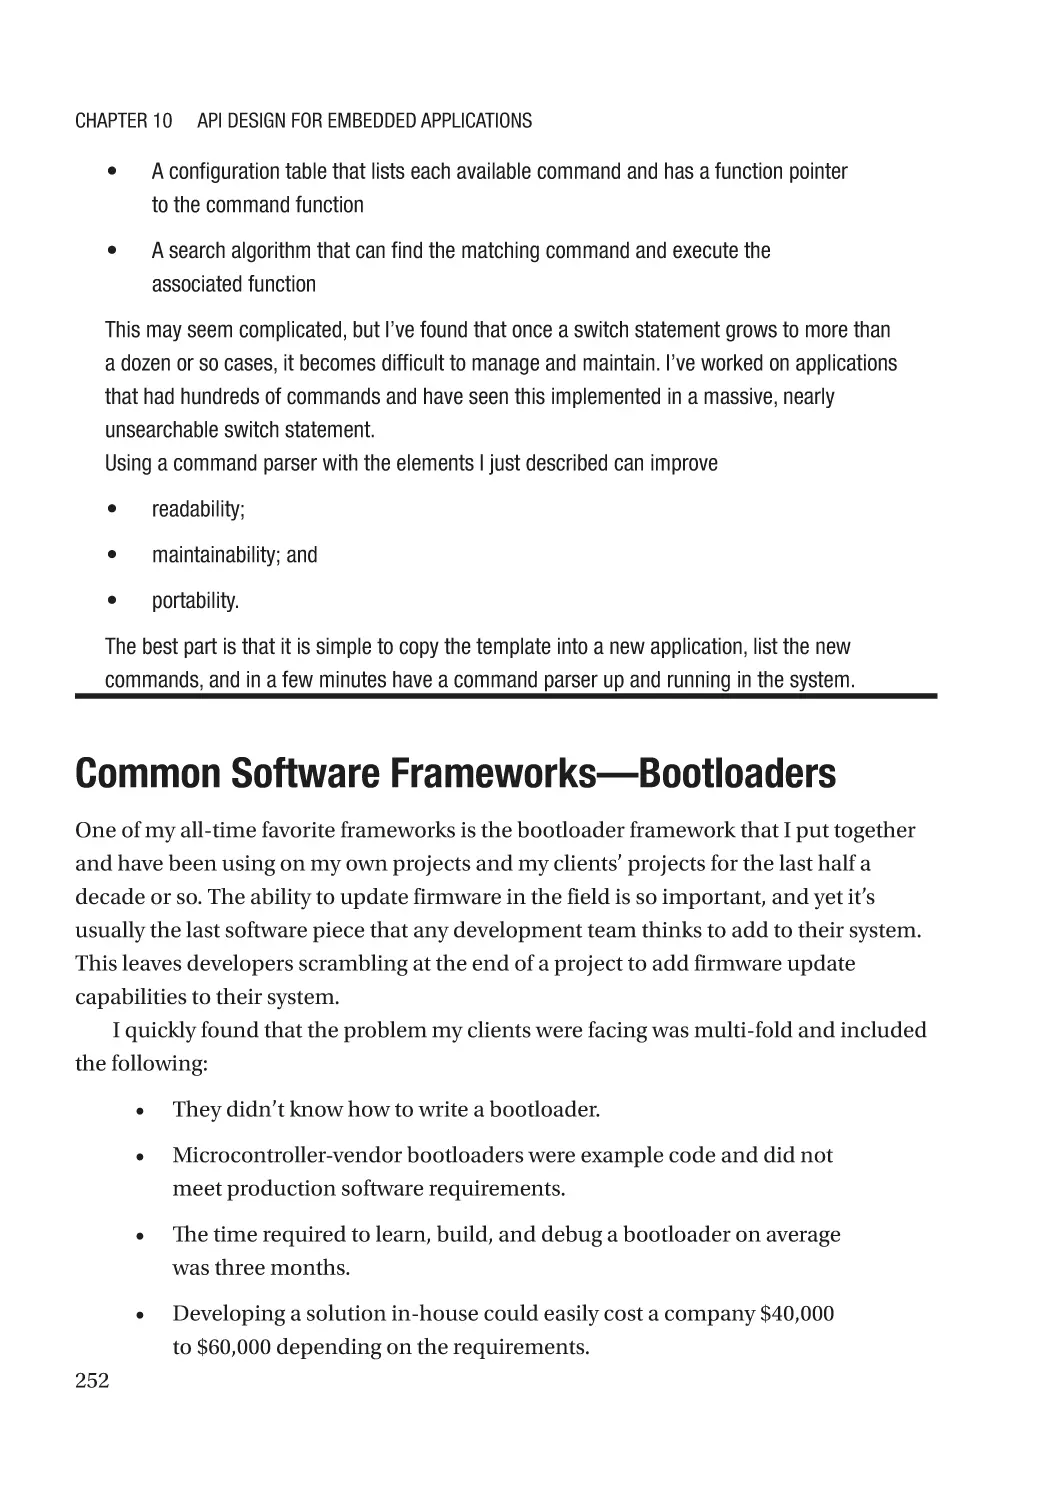 Common Software Frameworks—Bootloaders